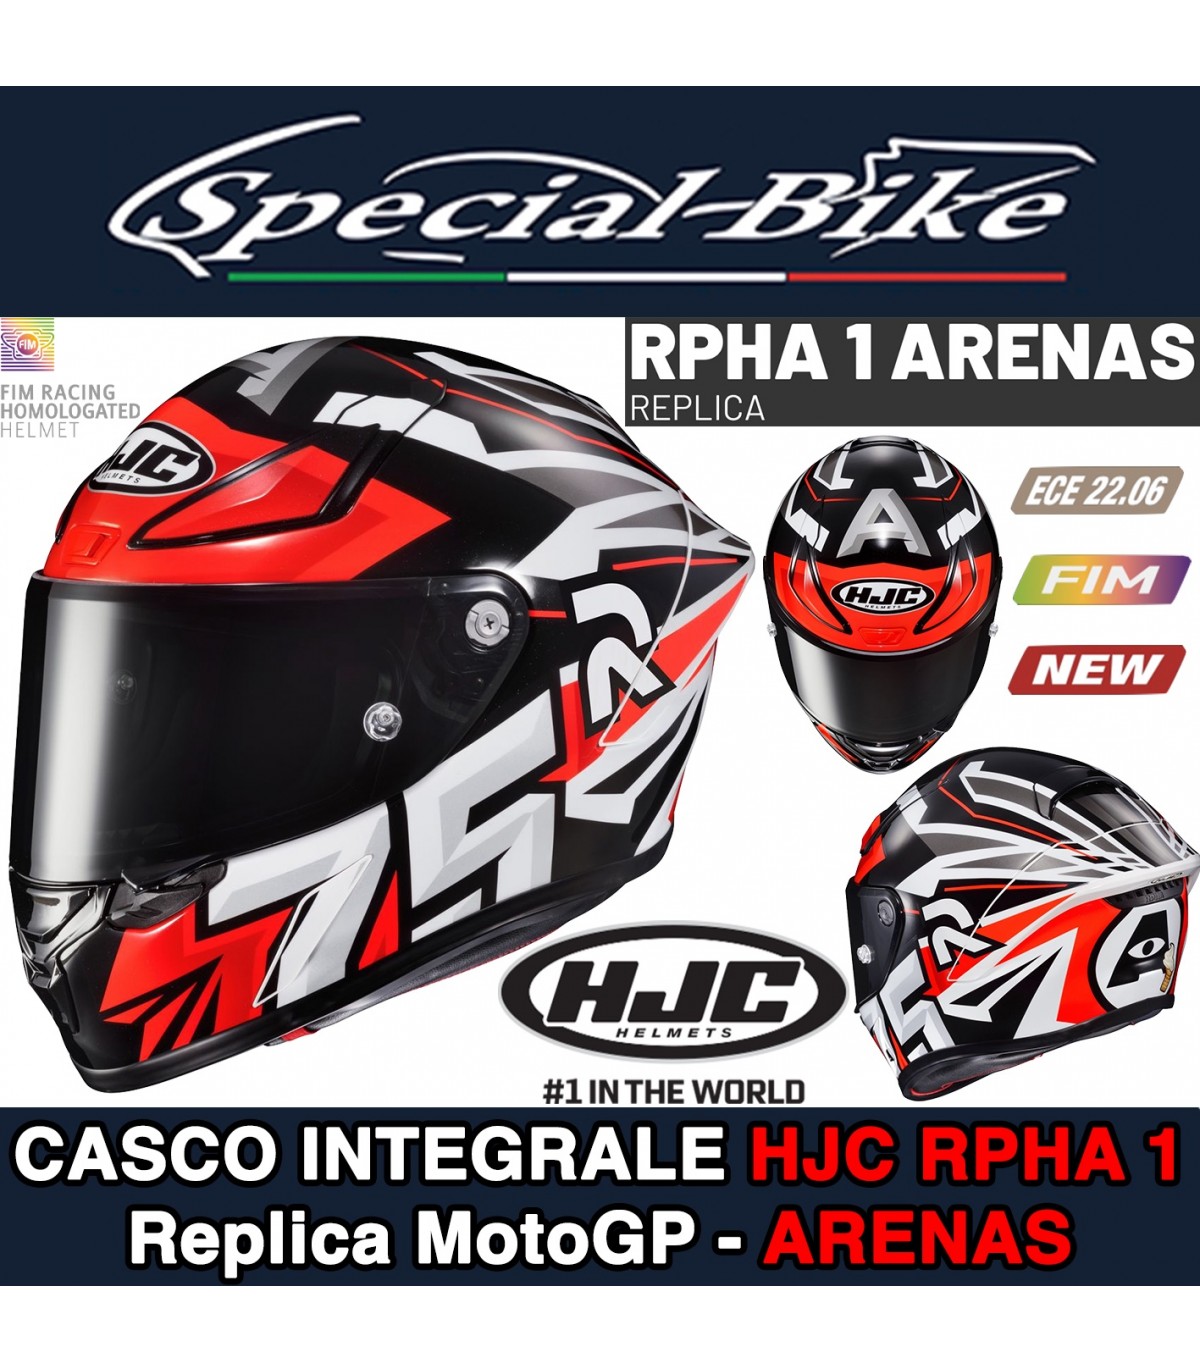 Casco Integrale HJC RPHA1 ARENAS Replica Moto Gp